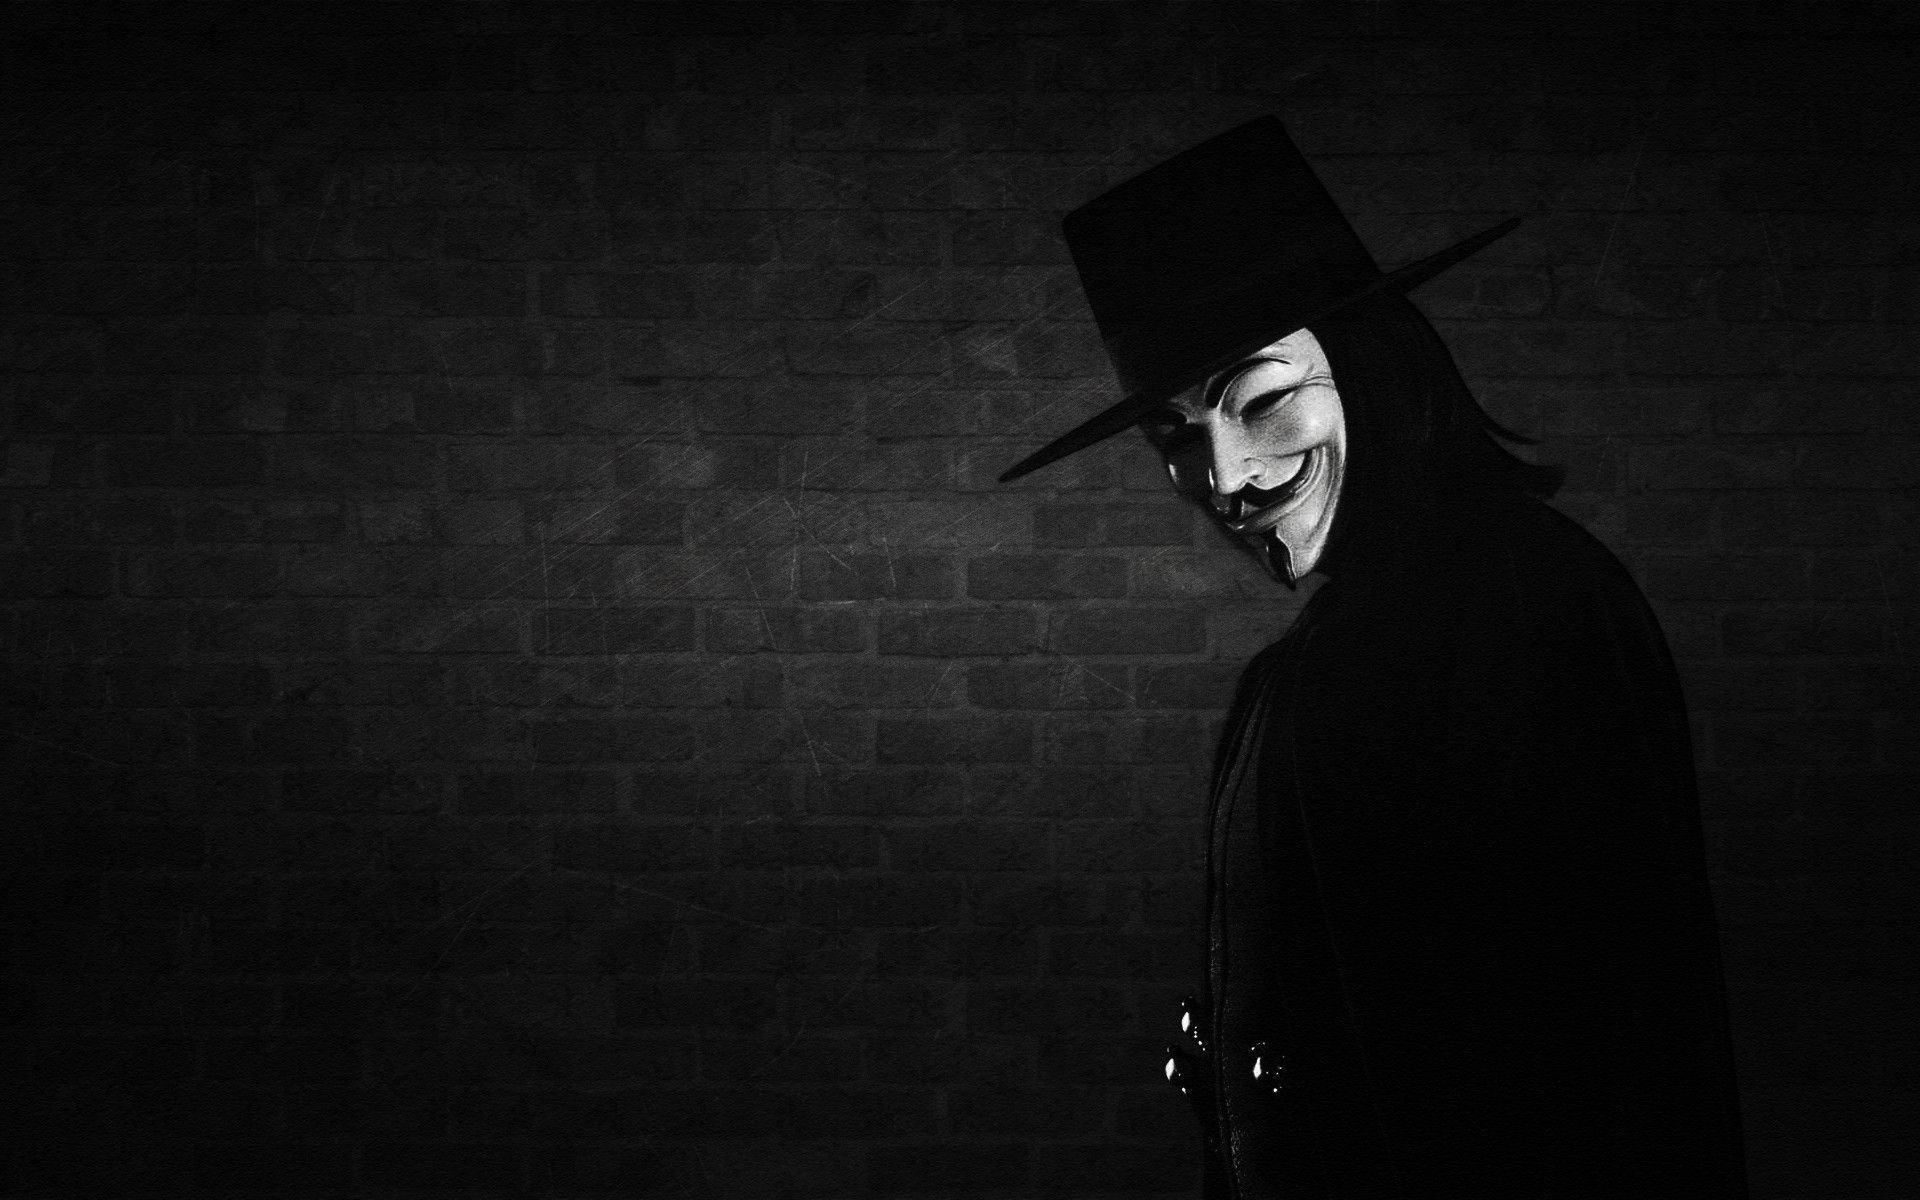 V For Vendetta Wallpaper Top Background